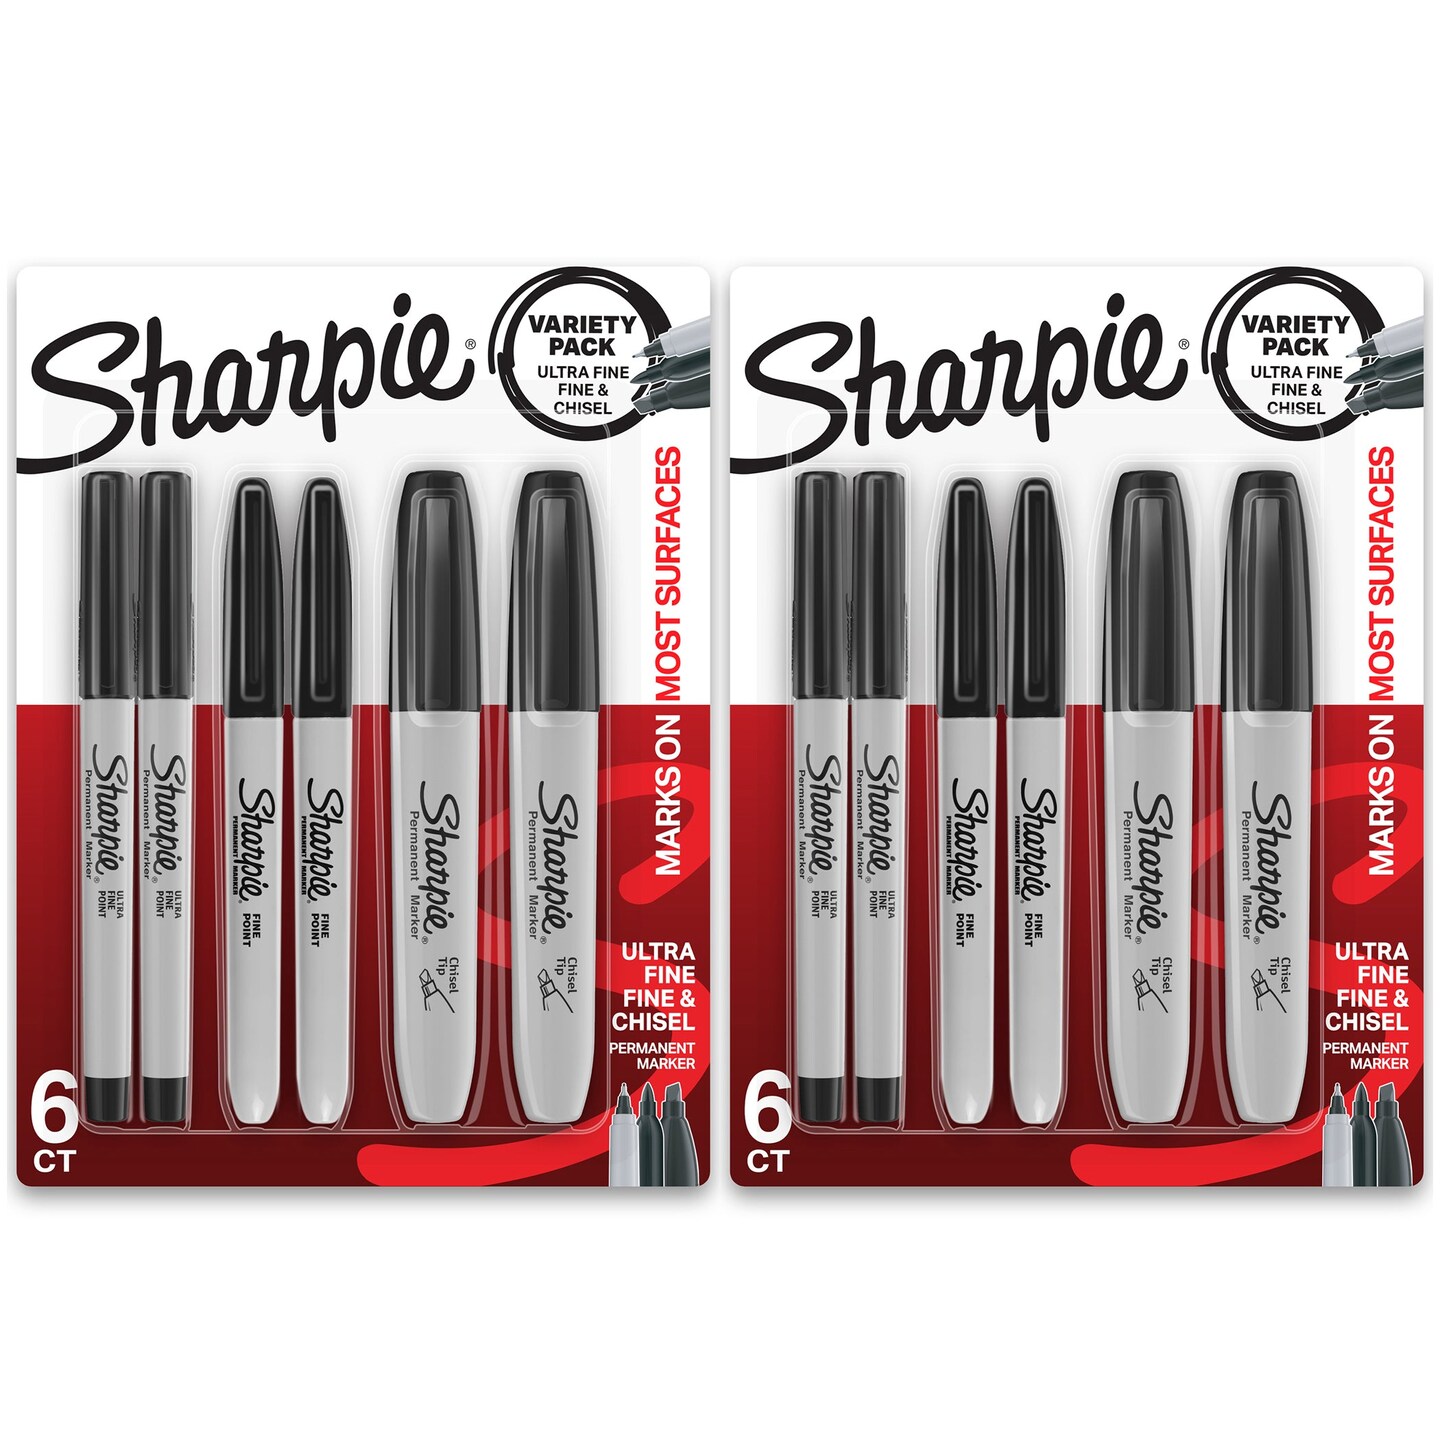 Sharpie Chisel Permanent Markers, Black, 2 Count